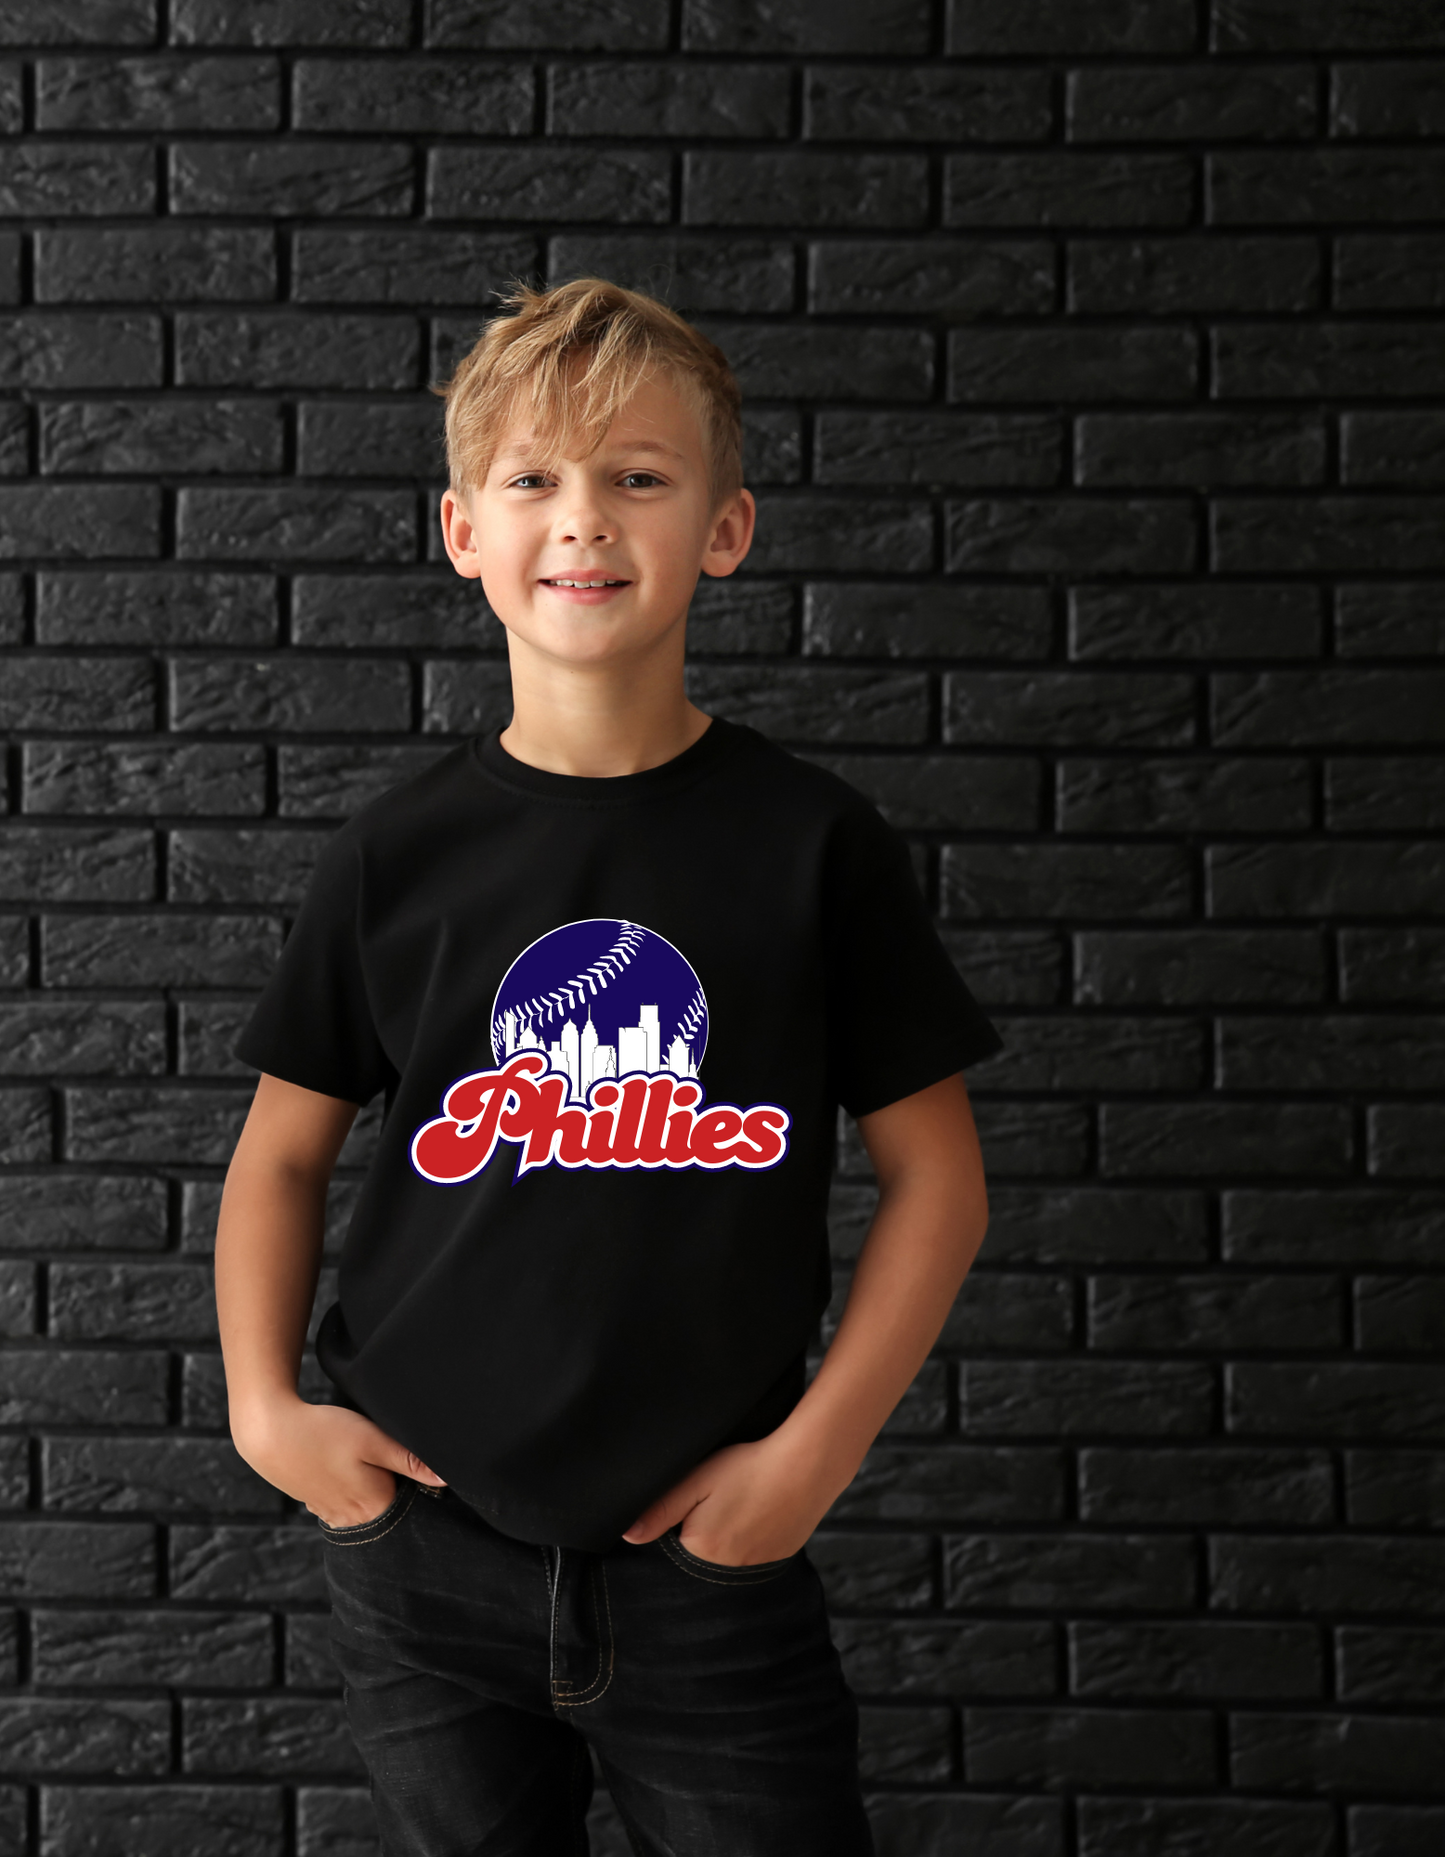 Phillies Skyline and baseball Youth Tees